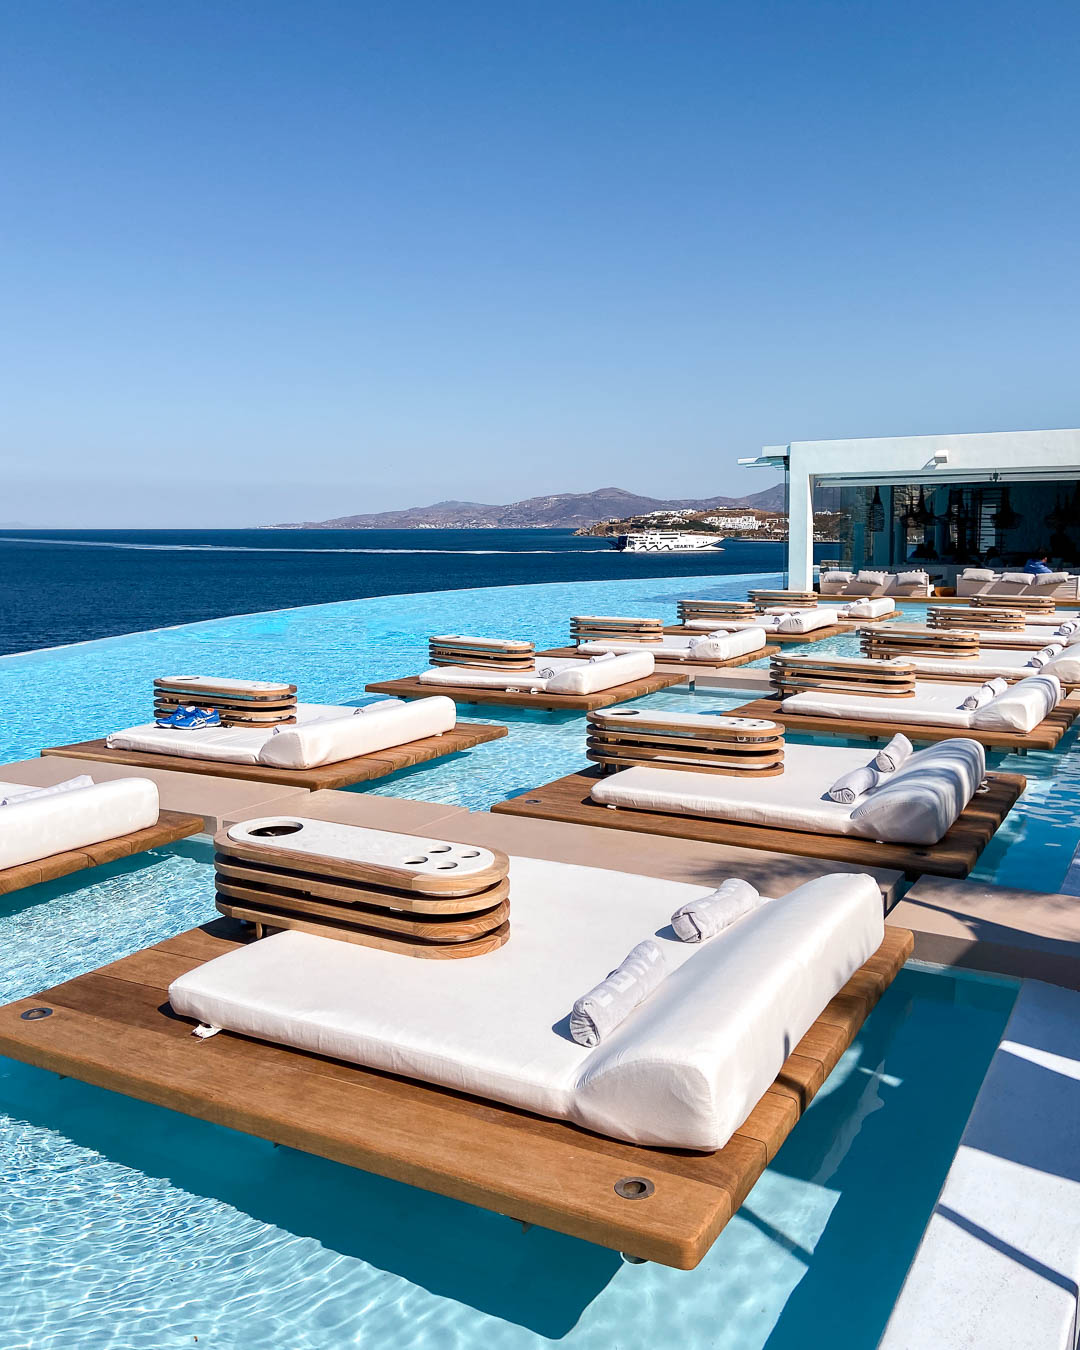 10 Best Luxury Hotels in Mykonos and Santorini 